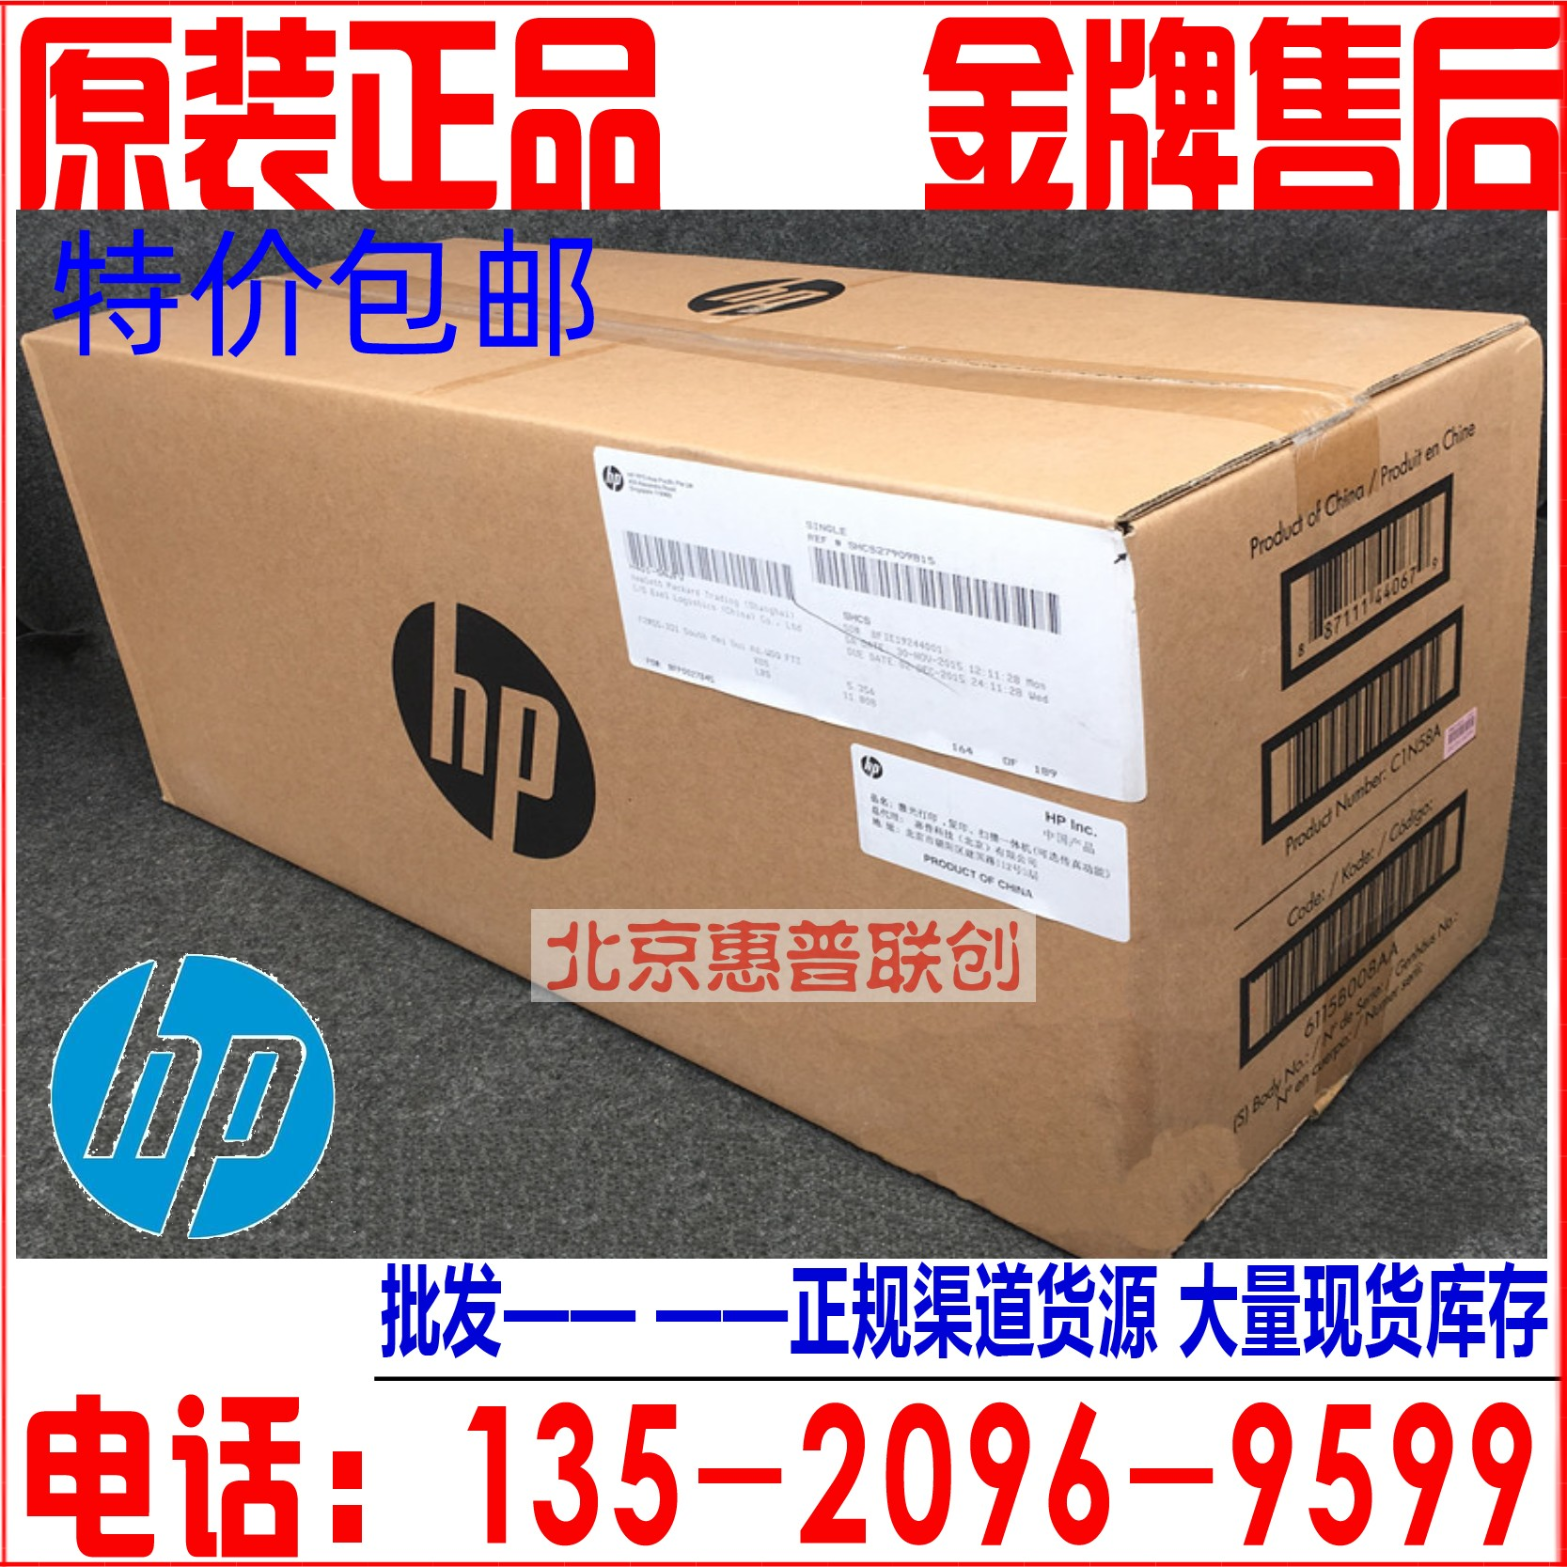 HP806 830加热组件定影器 RM1-9814 CF367-67906 RM1-9713 C2H57A